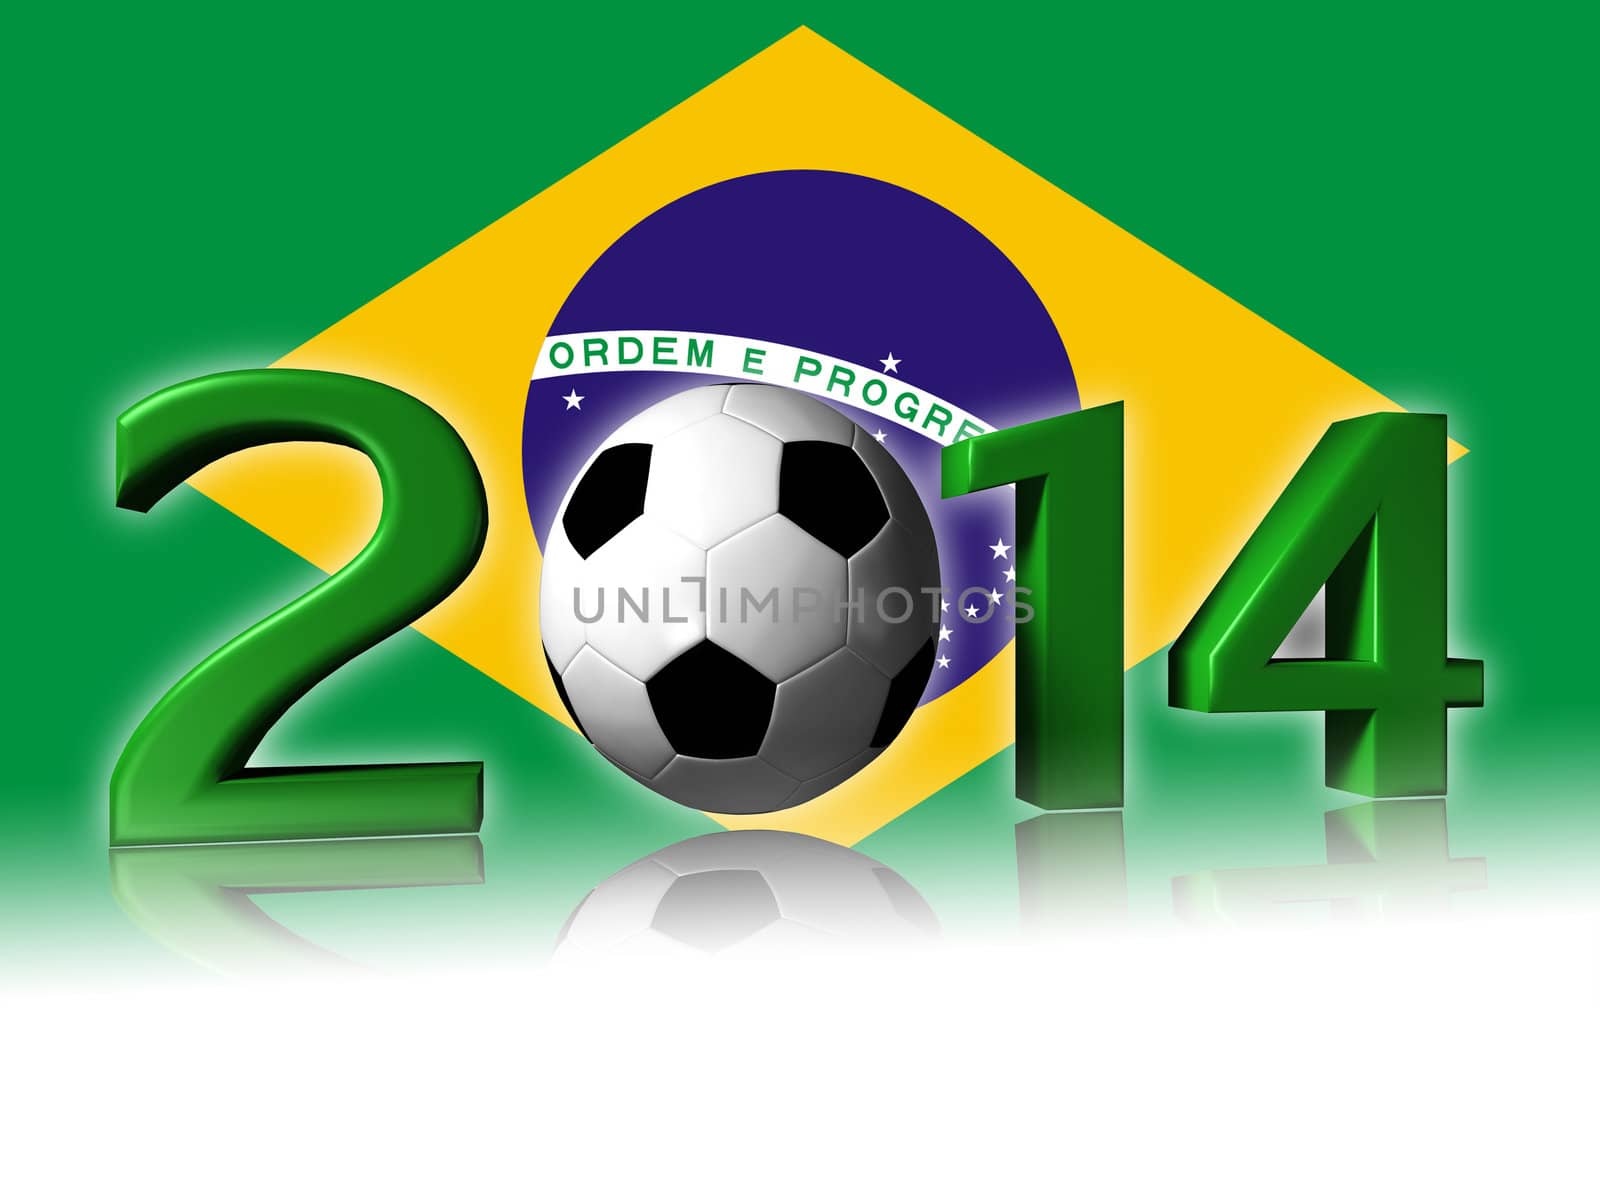 Big 2014 soccer logo with bazilian flag by shkyo30